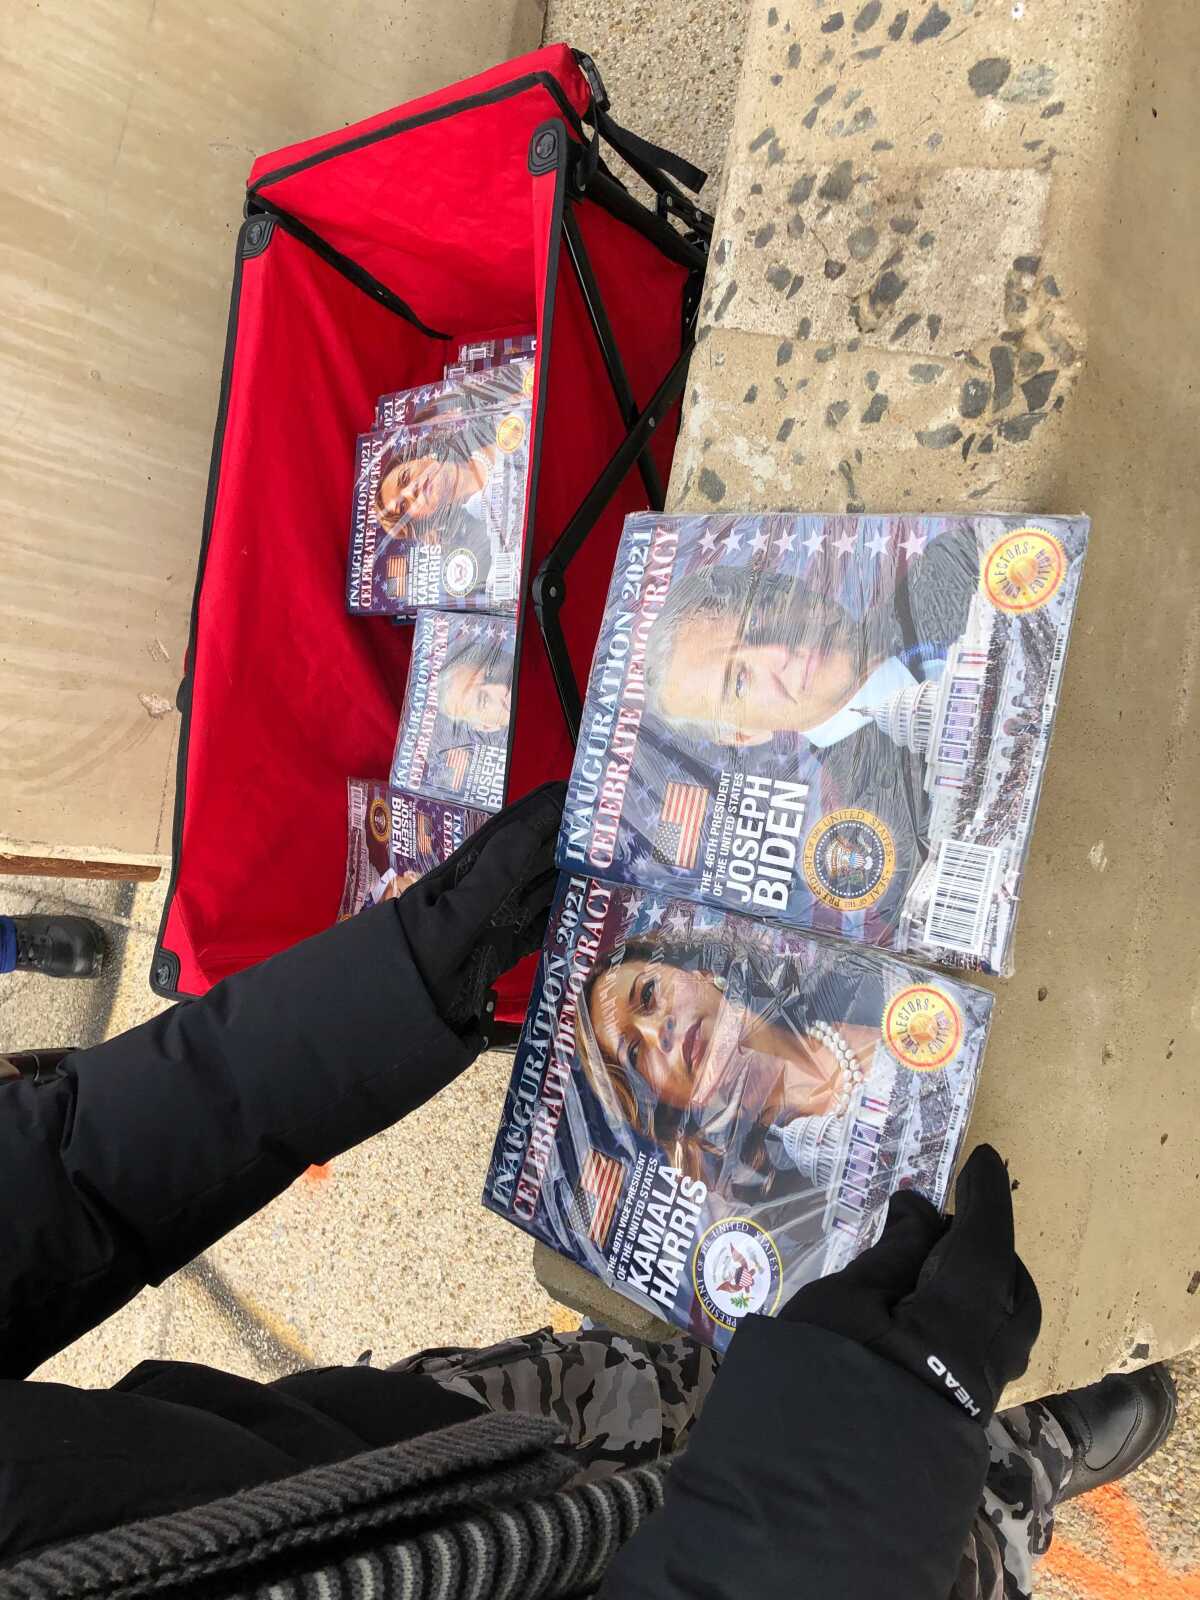 A vendor near Union Station in Washington showcases inauguration booklets for sale.